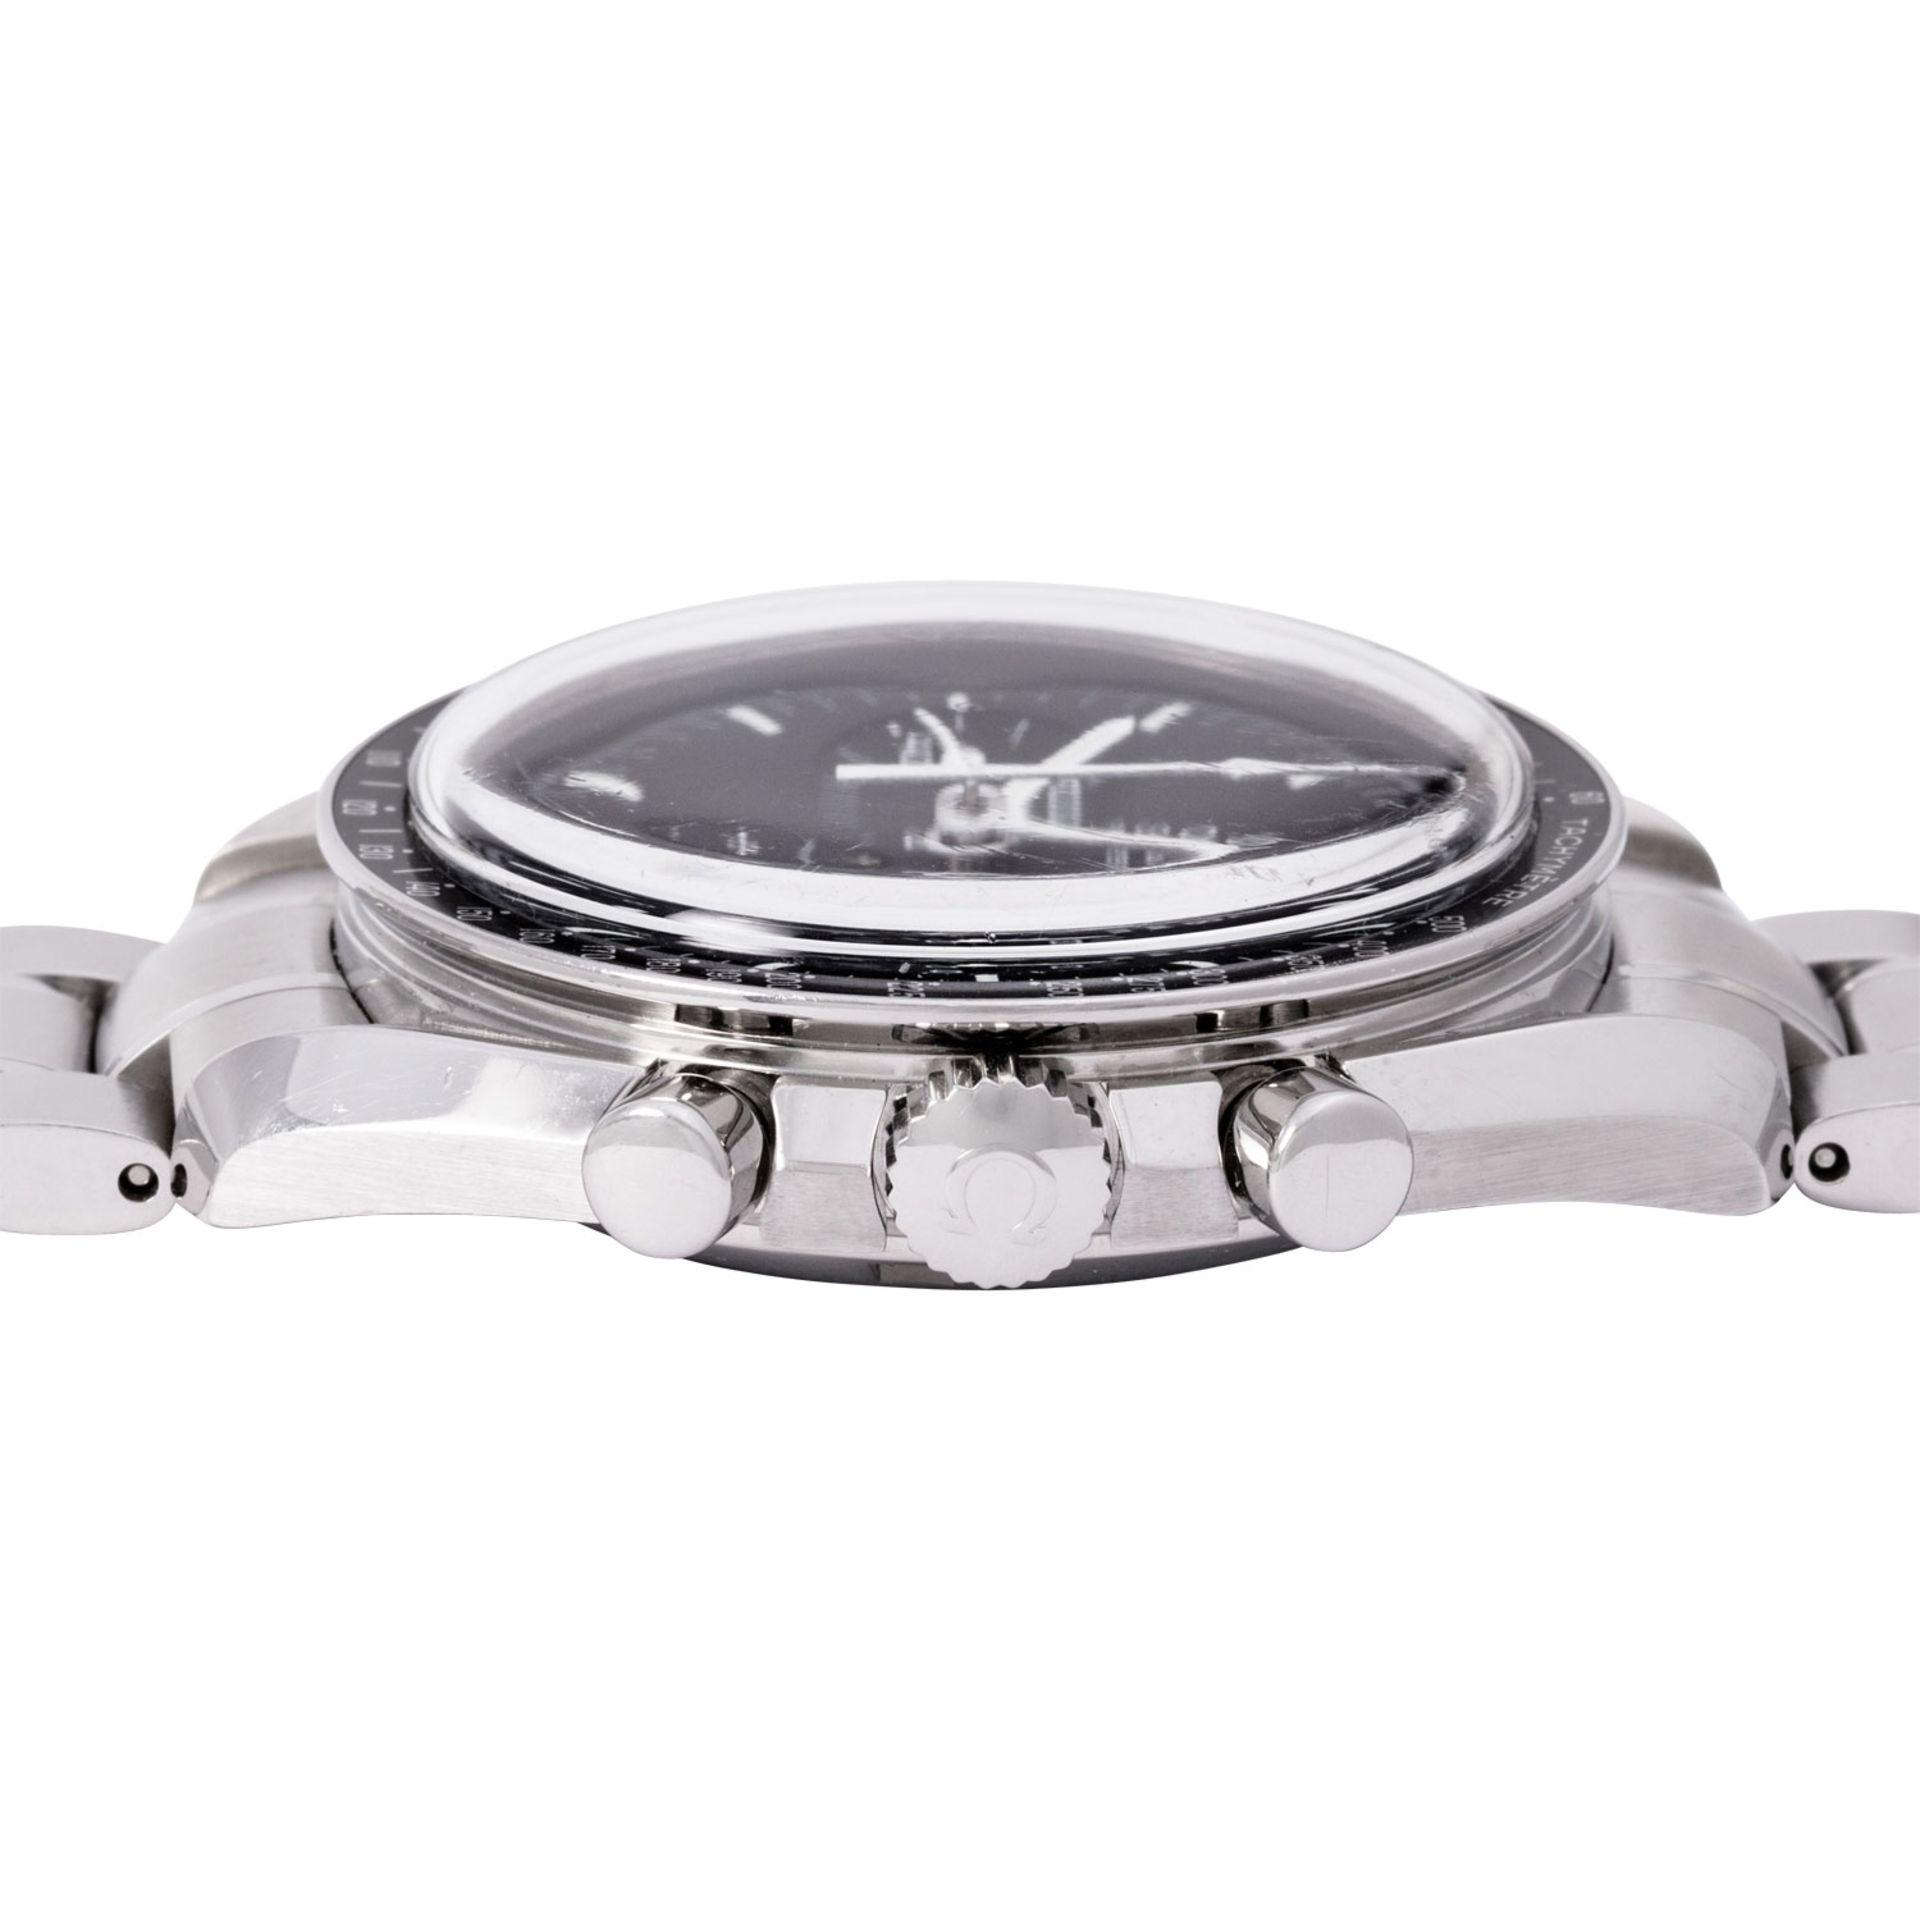 OMEGA Speedmaster Professional Moonwatch Ref. 345.0022 Herren Armbanduhr.  - Bild 3 aus 8